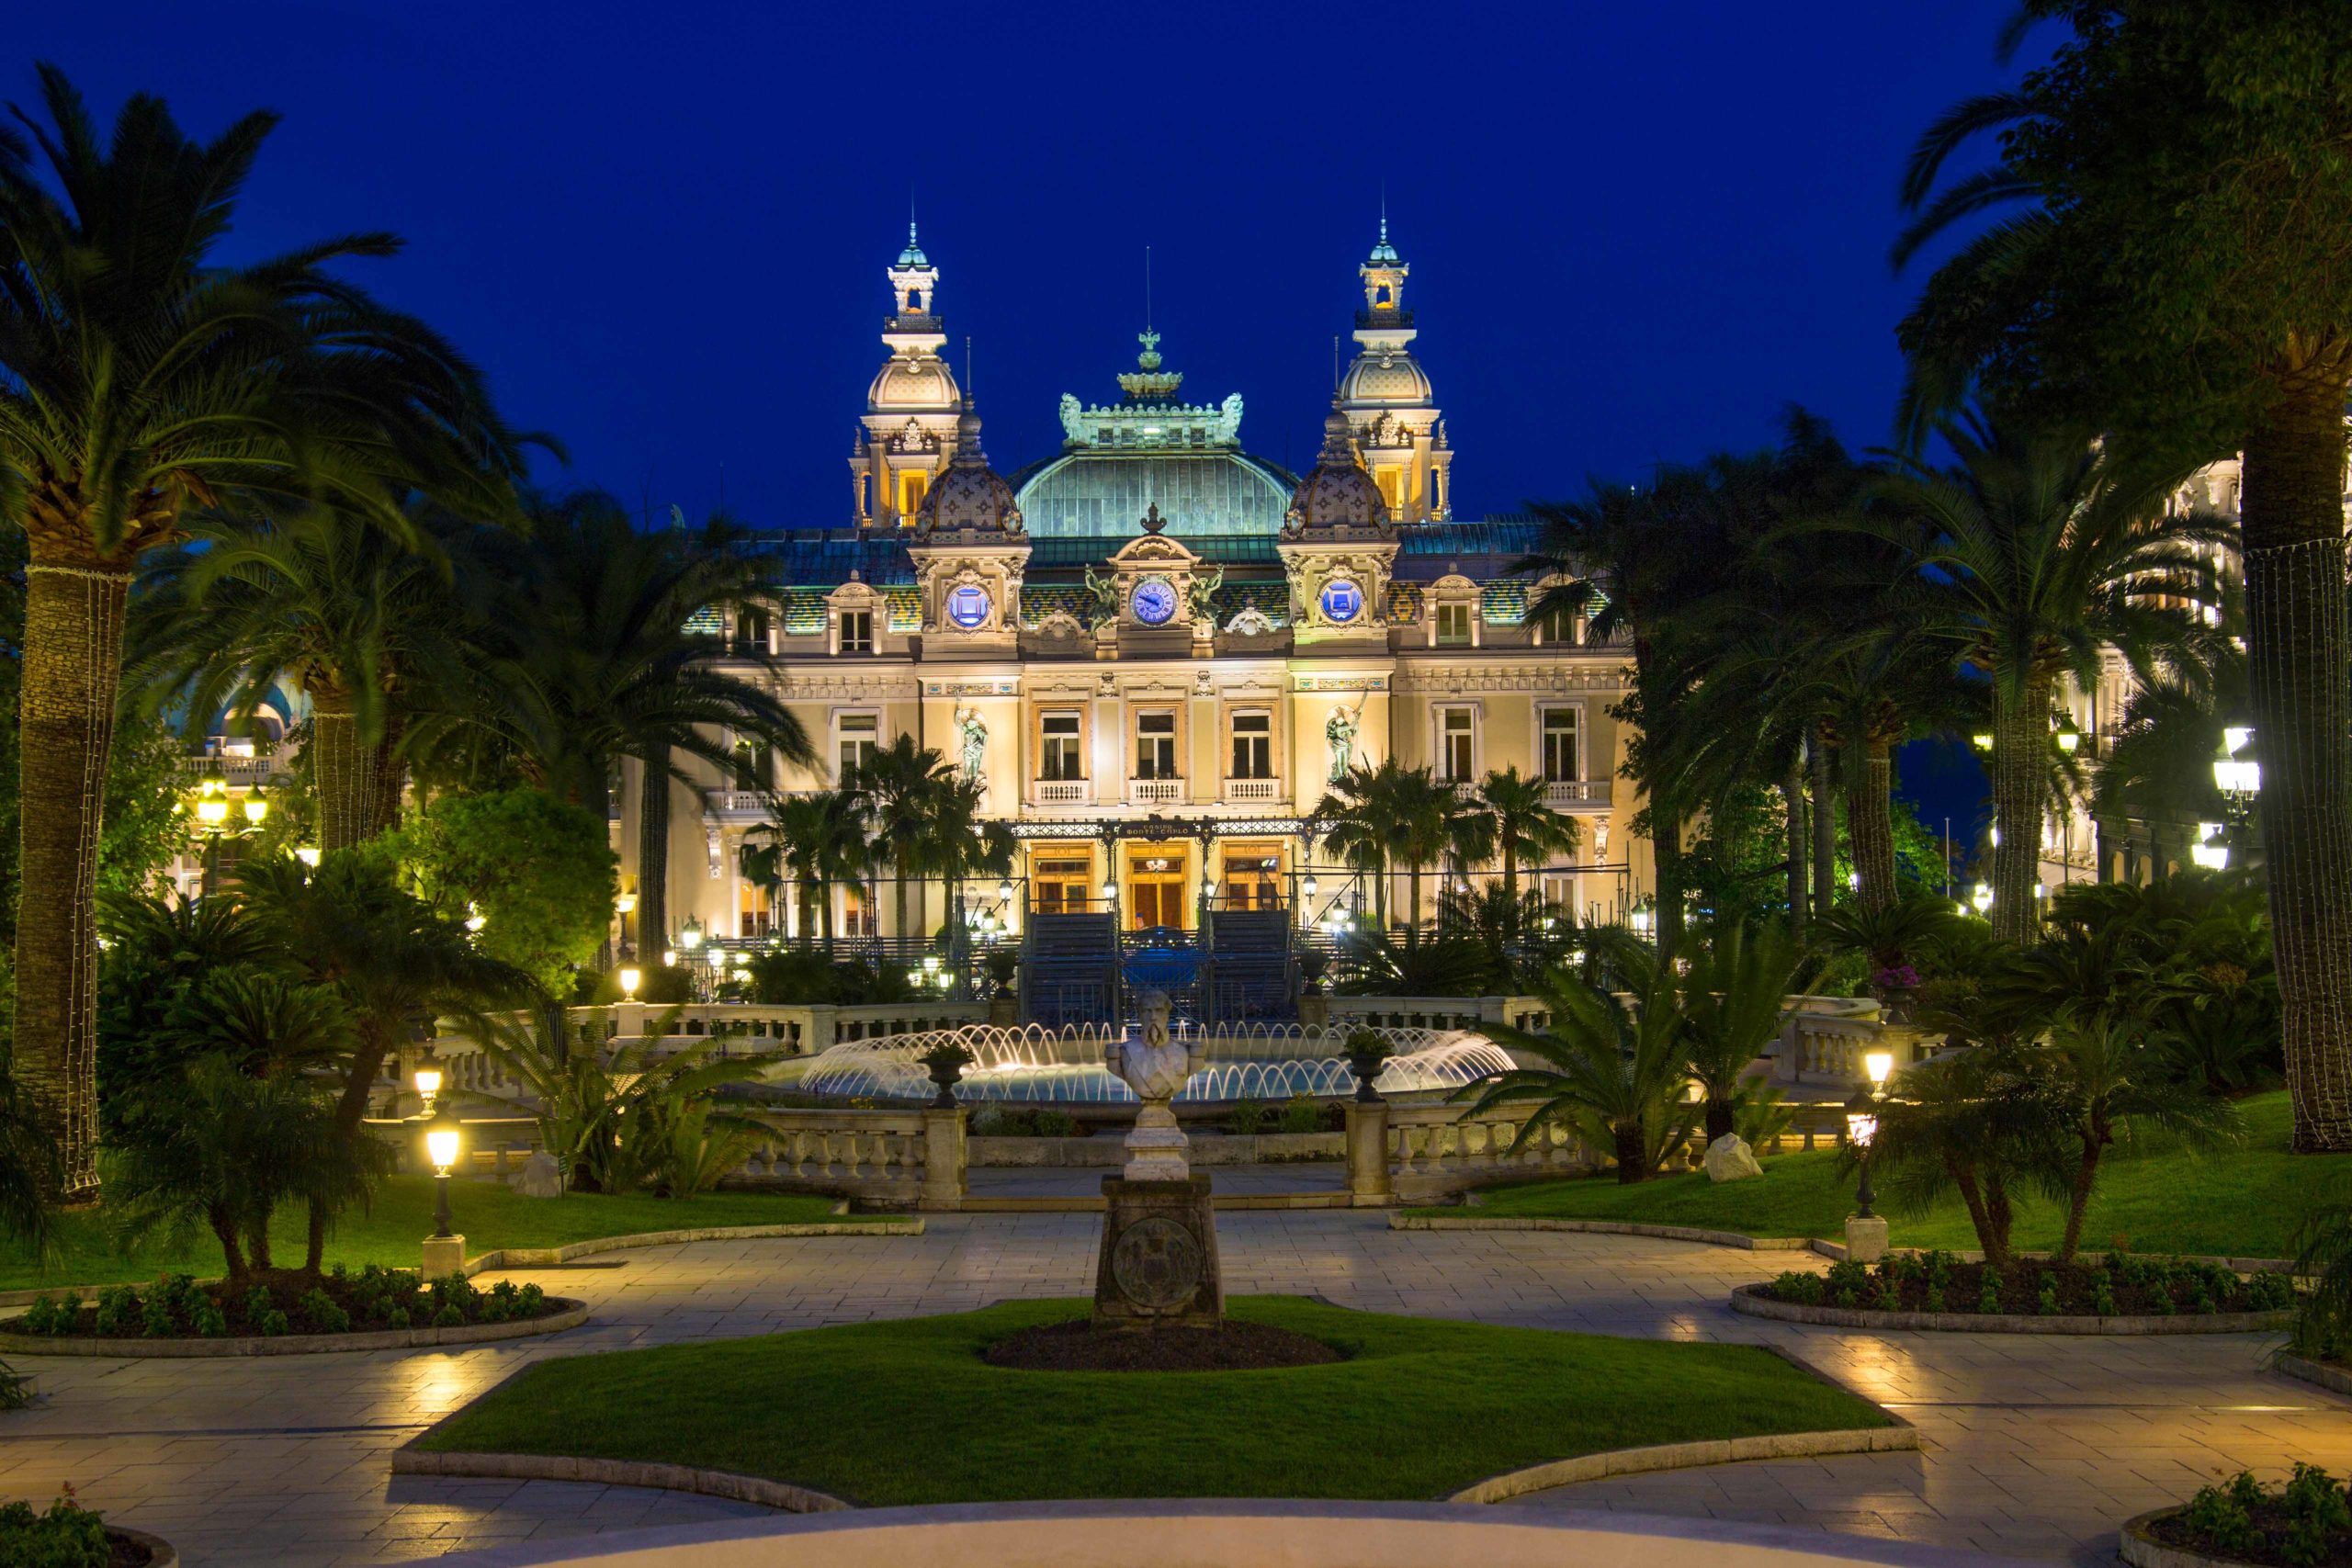 Monte-Carlo Casino - Monaco by night. Photo: @SteveAllenPhoto via Twenty20